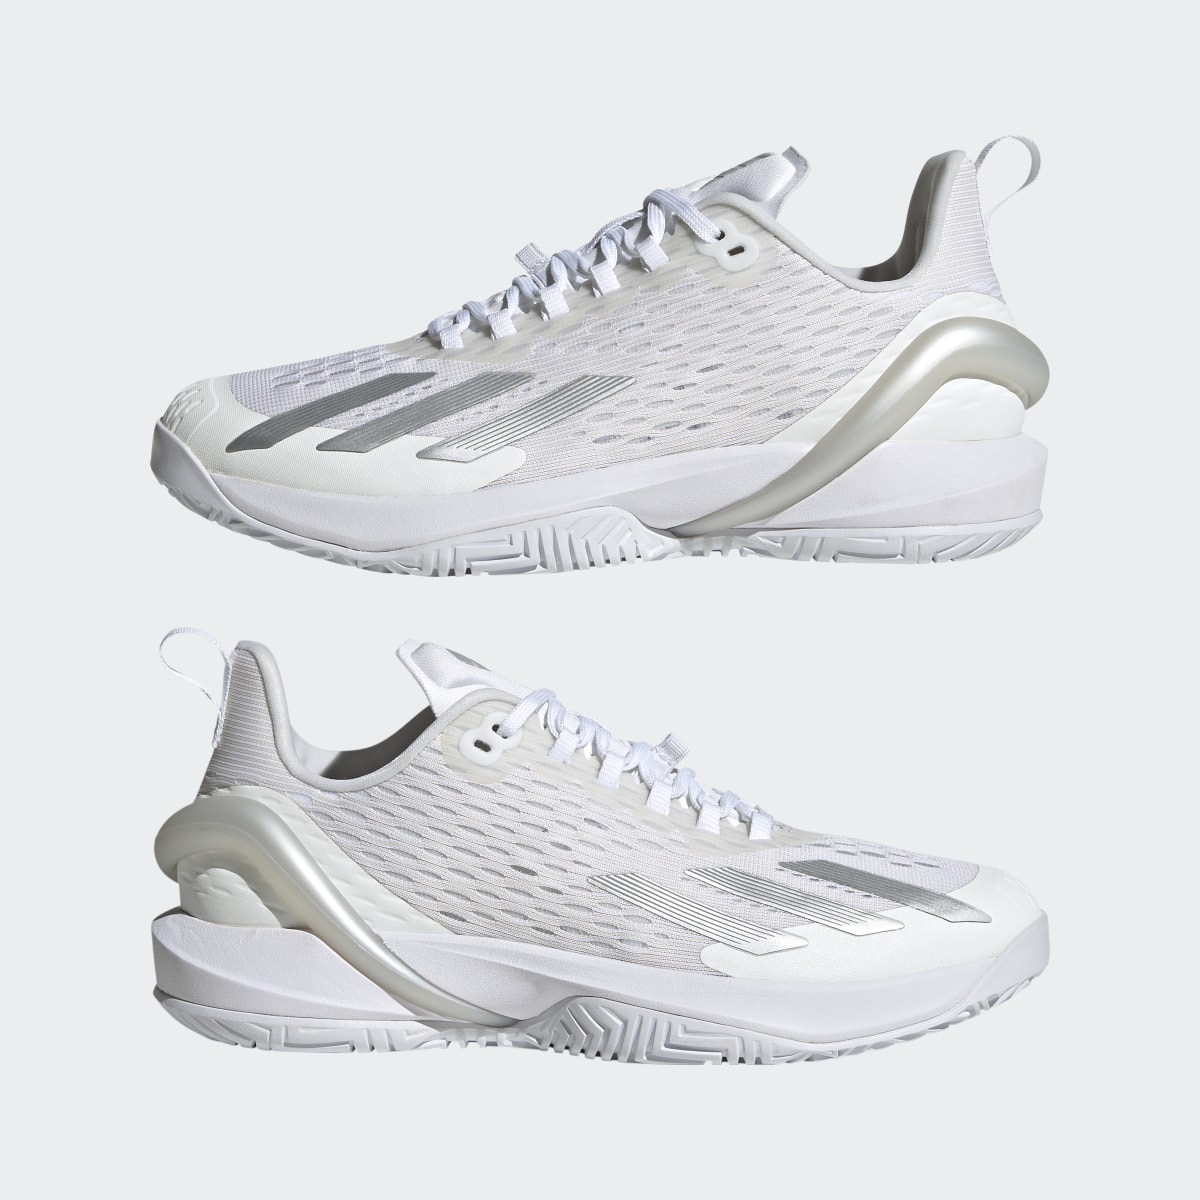 Adidas adizero Cybersonic Tenis Ayakkabısı. 11